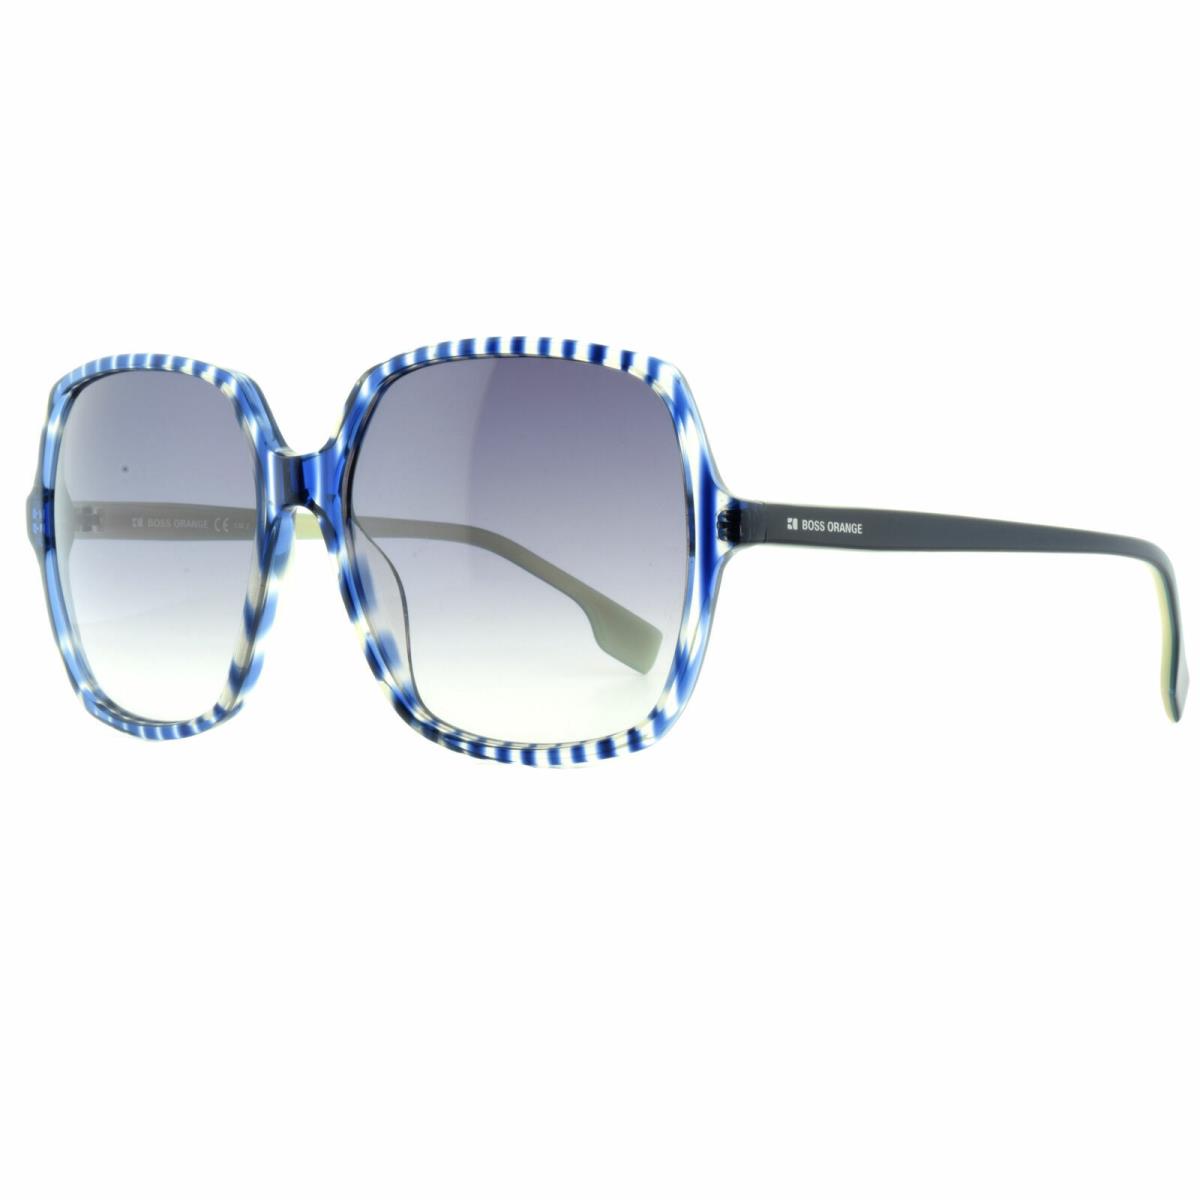 Hugo Boss Orange 0033/S Afd Blue Square UV Blue Lens Sunglasses - Frame: Blue, Lens: Blue